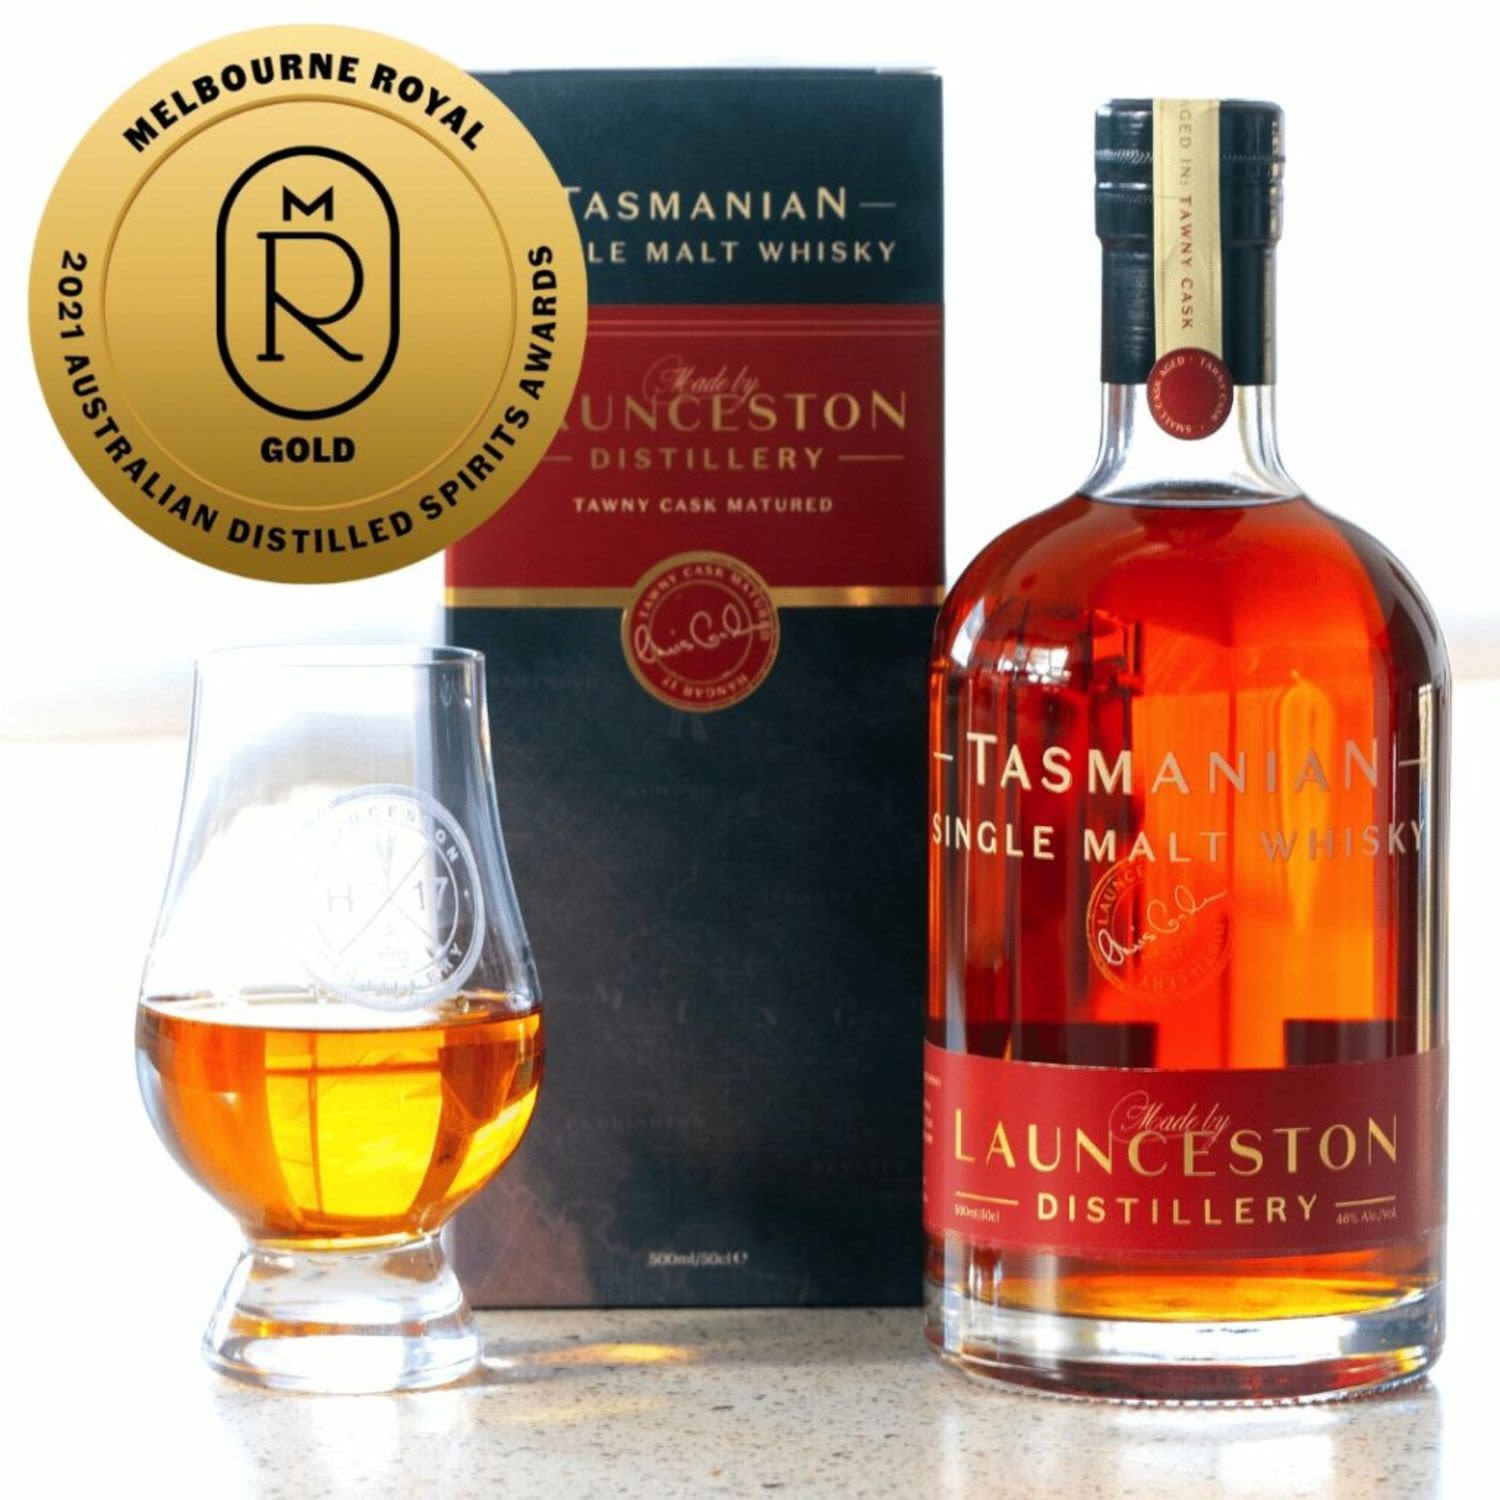 Launceston Distillery Tawny Cask Matured Single Malt Tasmanian Whiskey 500mL Bottle